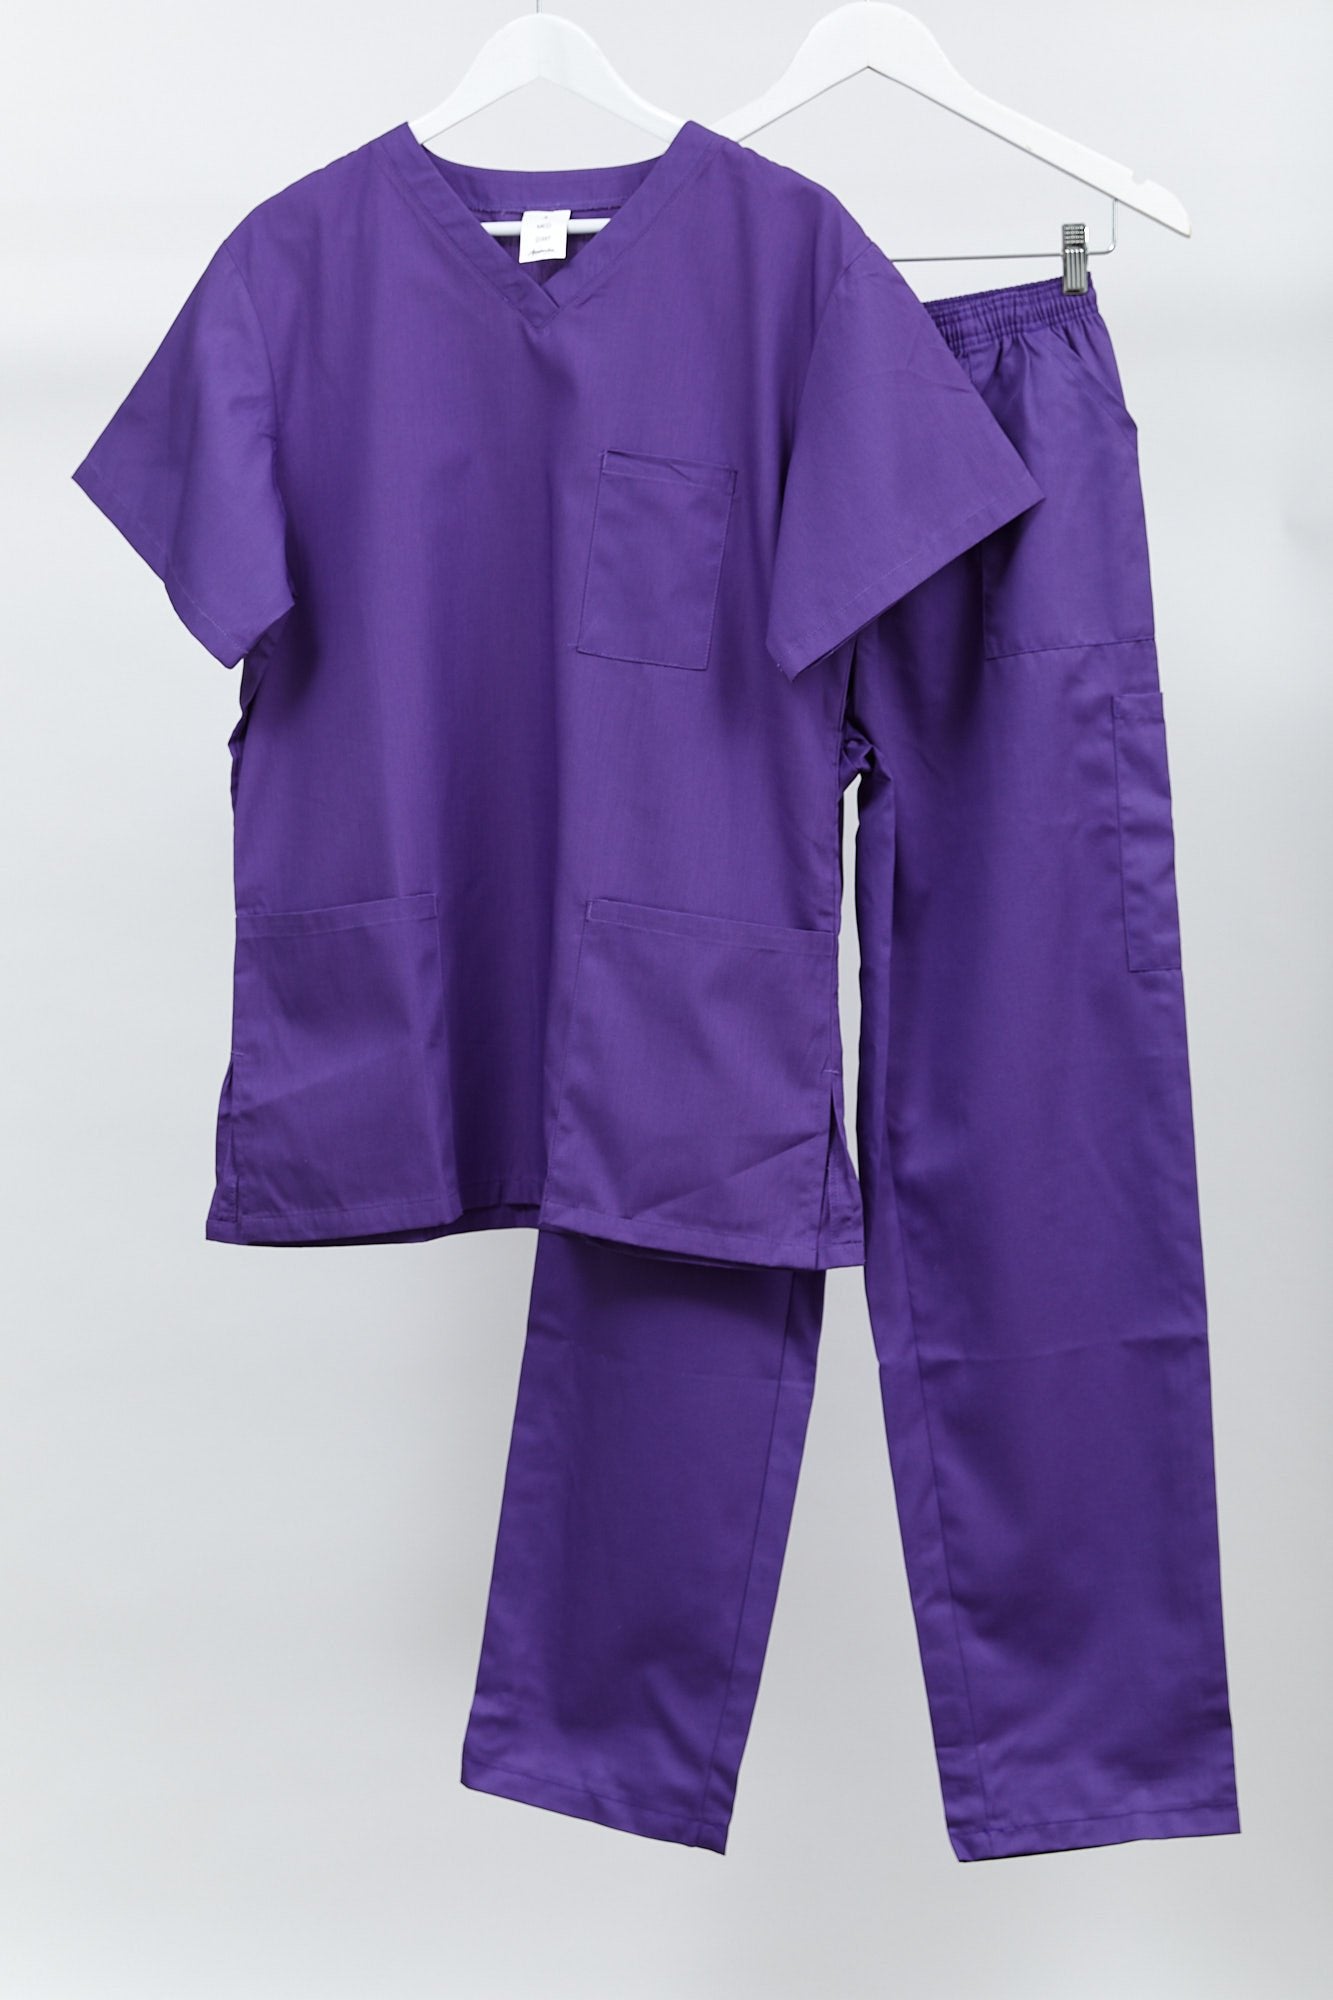 Purple scrubs set: size medium